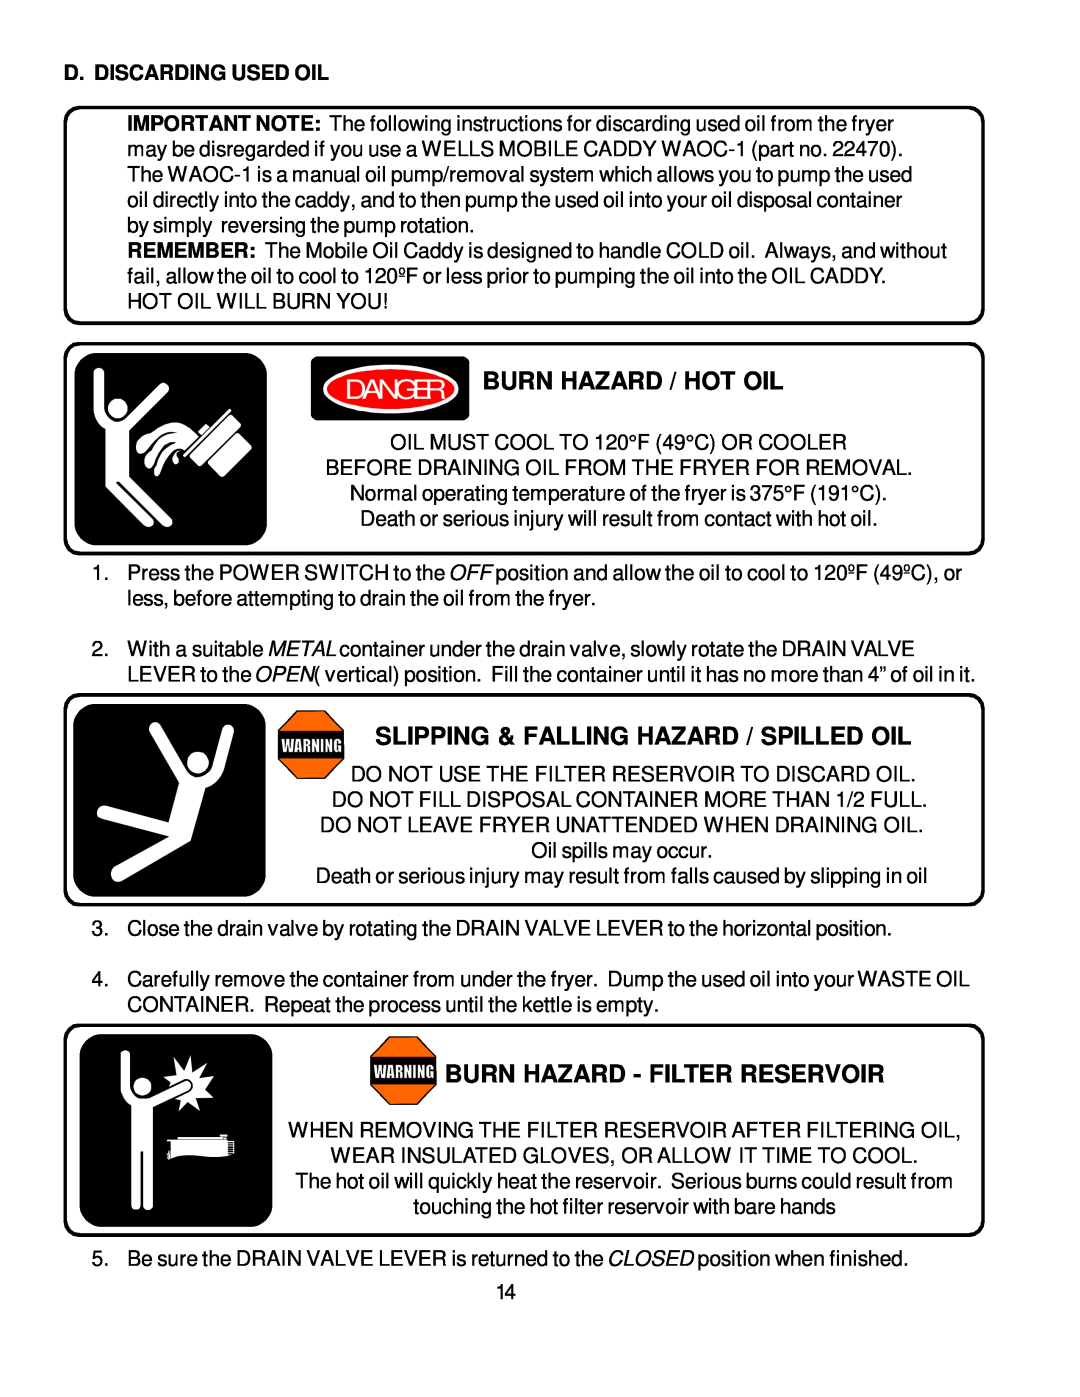 Bloomfield WFPE-30F manual Danger Burn Hazard / Hot Oil, Burn Hazard - Filter Reservoir, D. Discarding Used Oil 